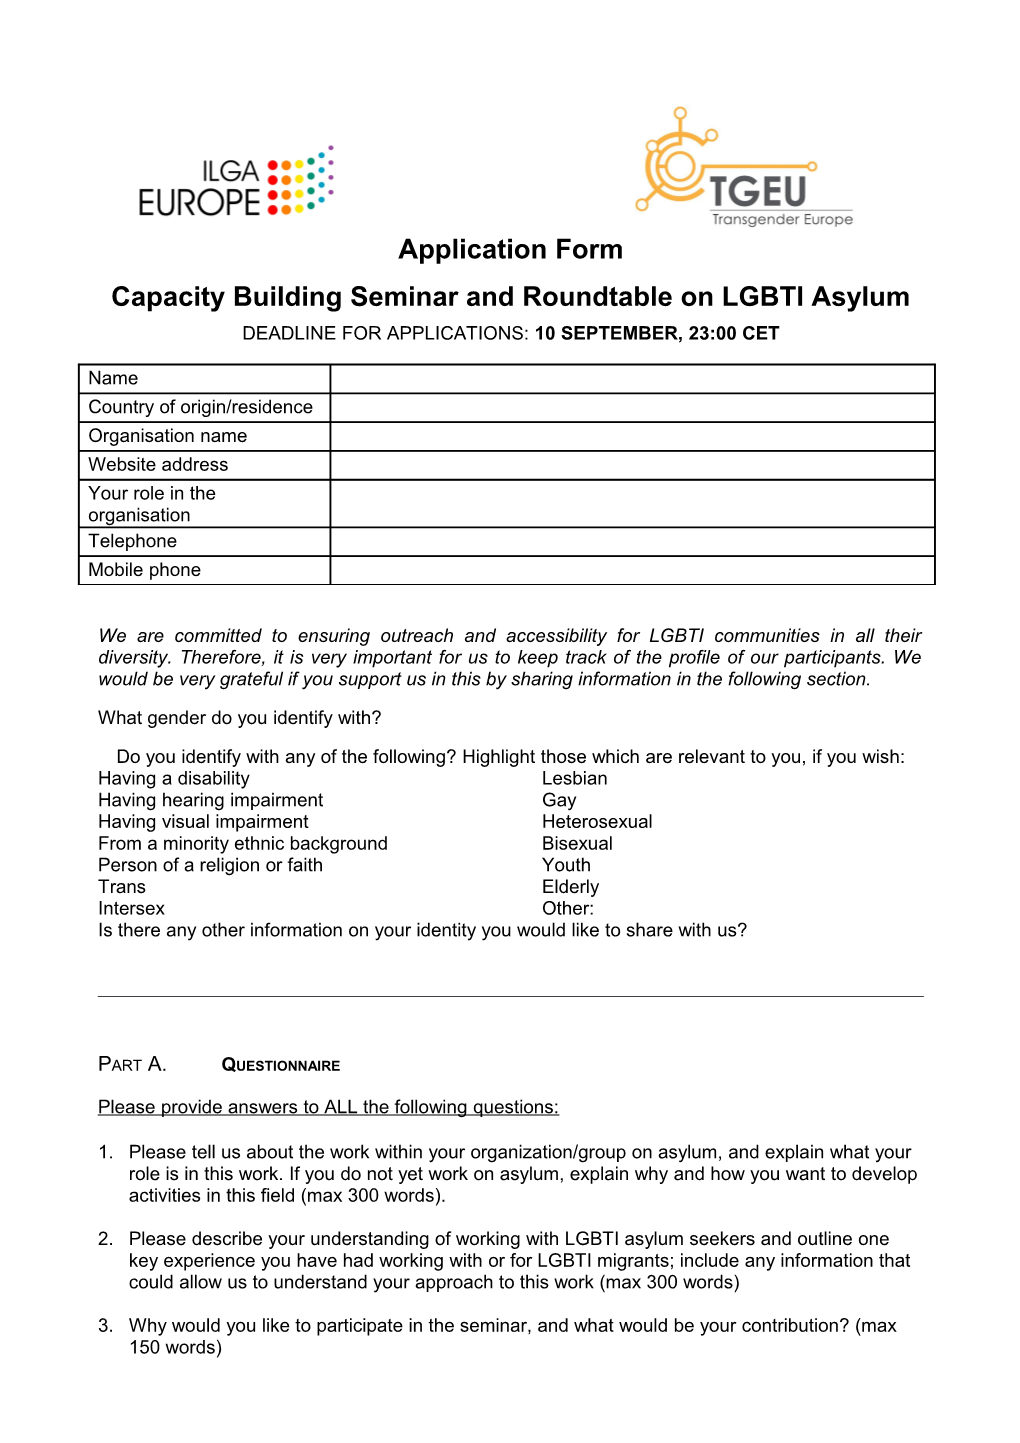 Capacity Building Seminar and Roundtable on LGBTI Asylum